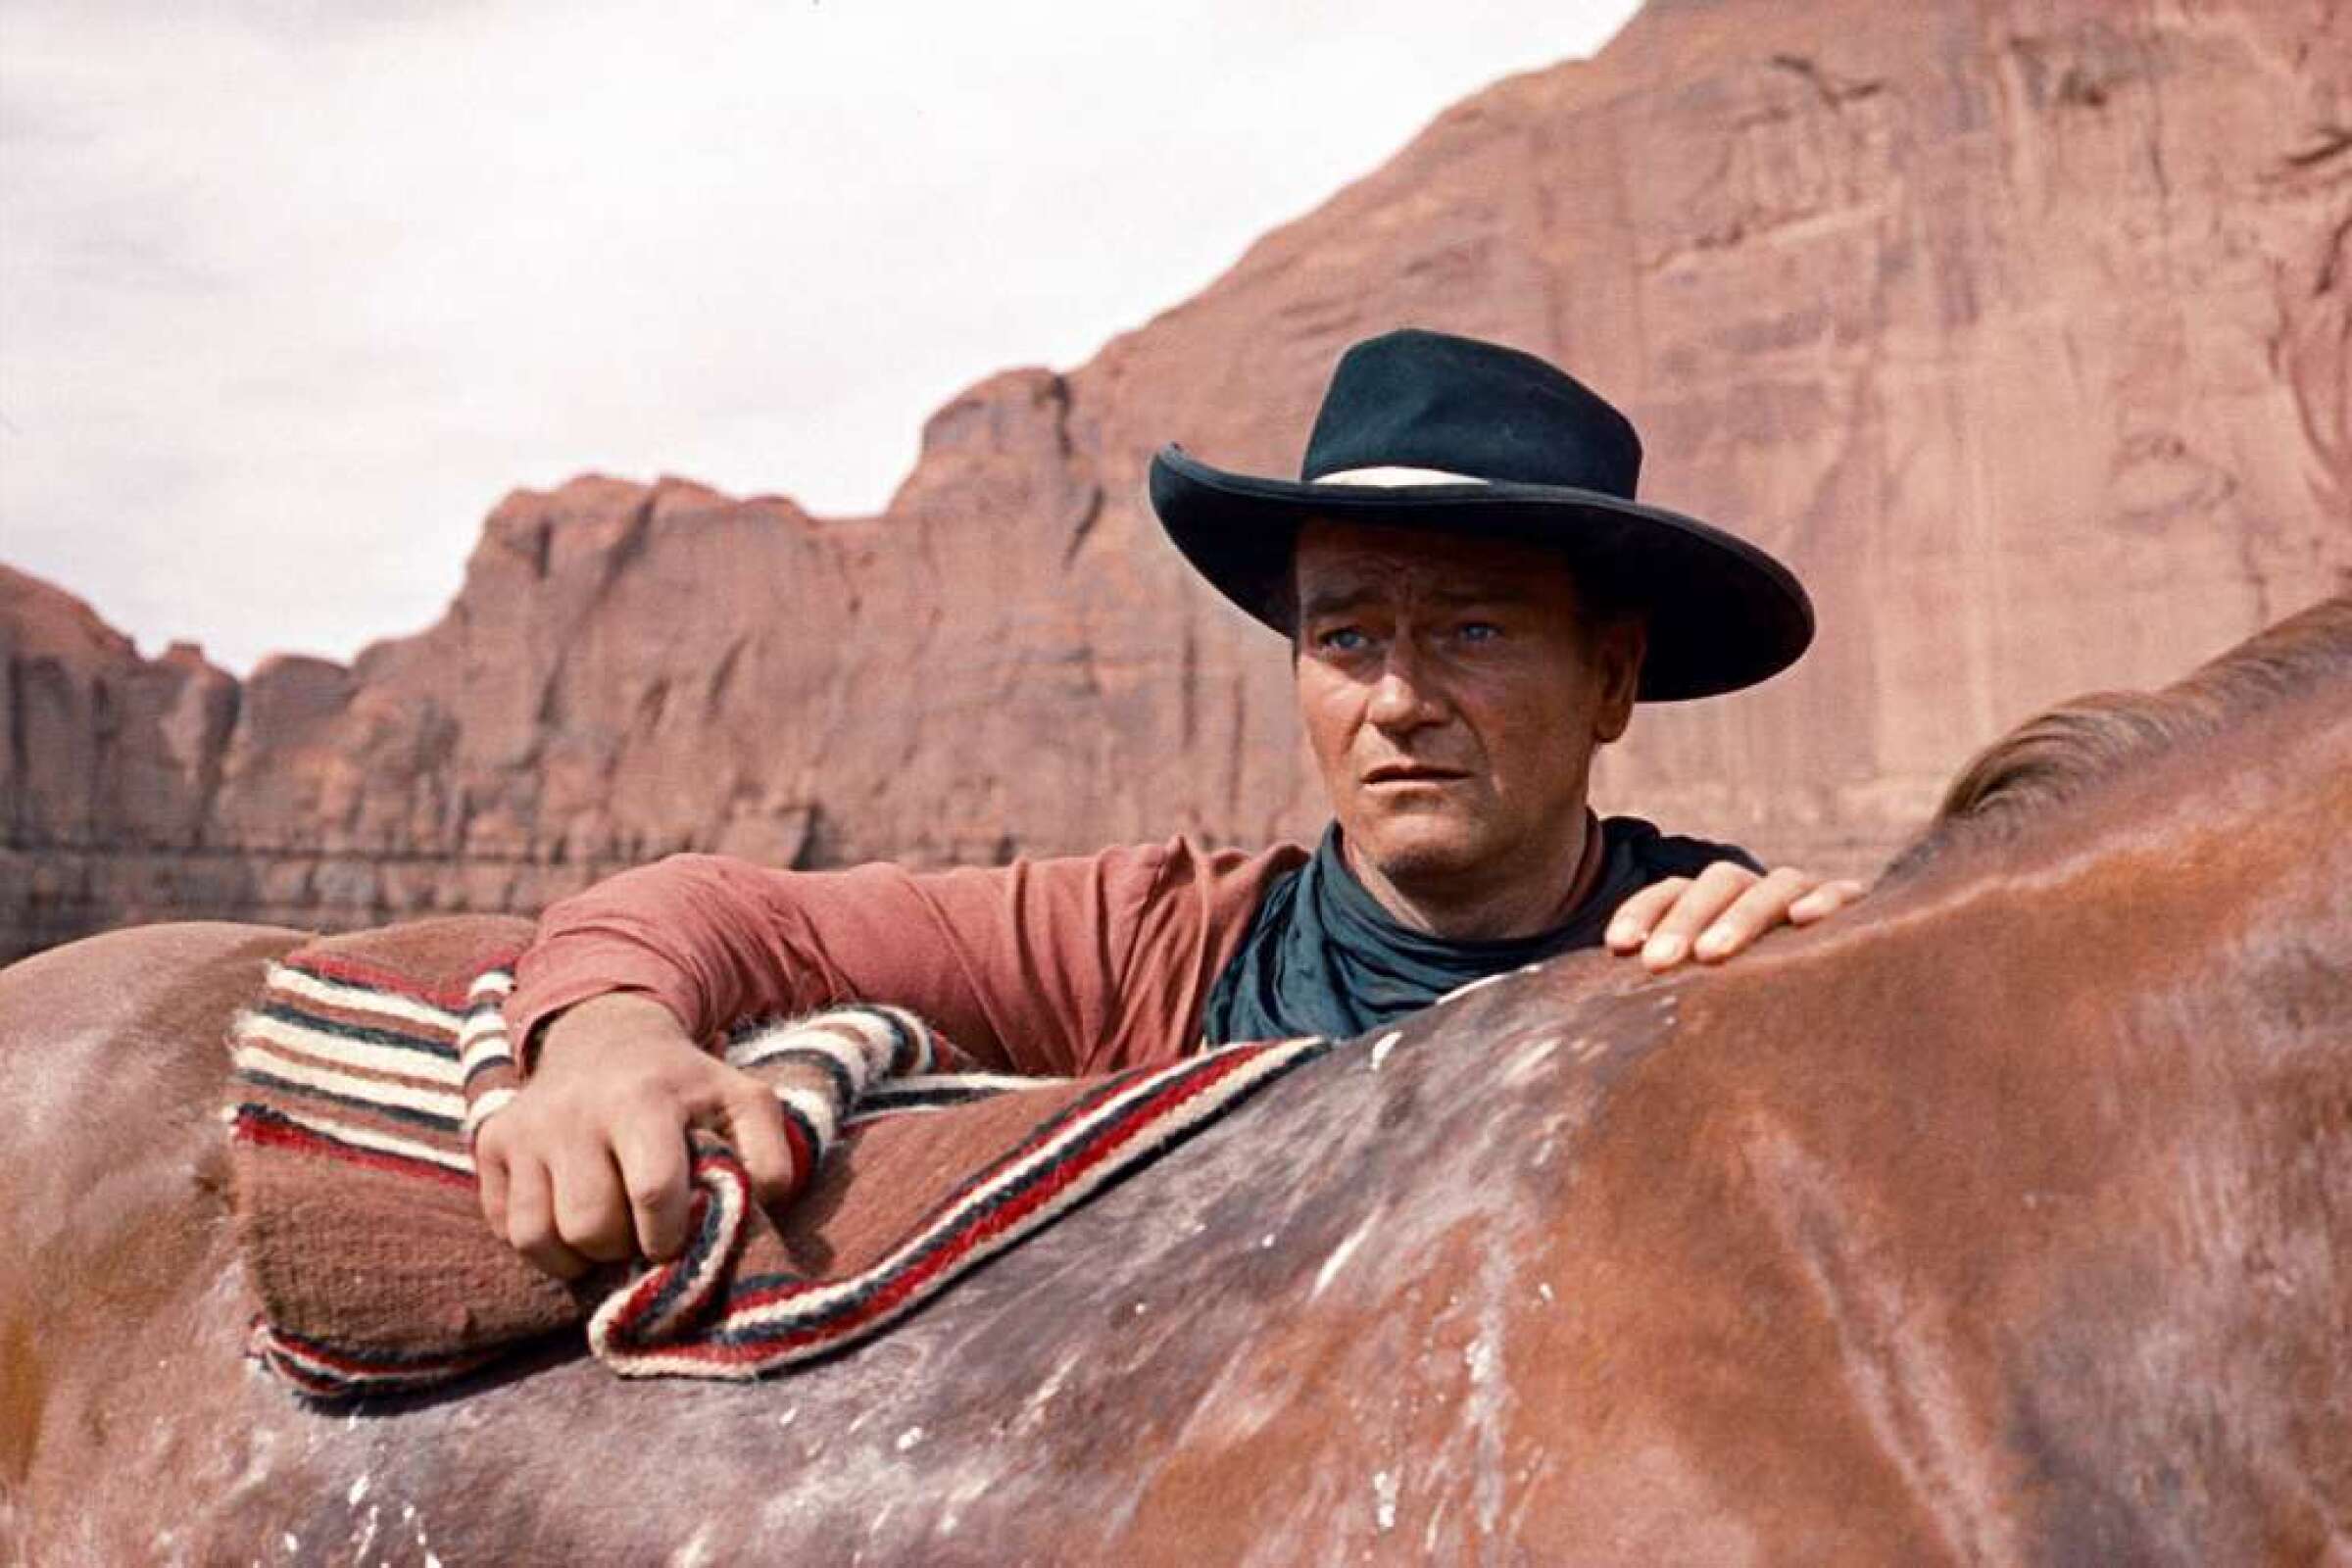 Young John Wayne Iconic Western Pose New 8 x 10 Print 